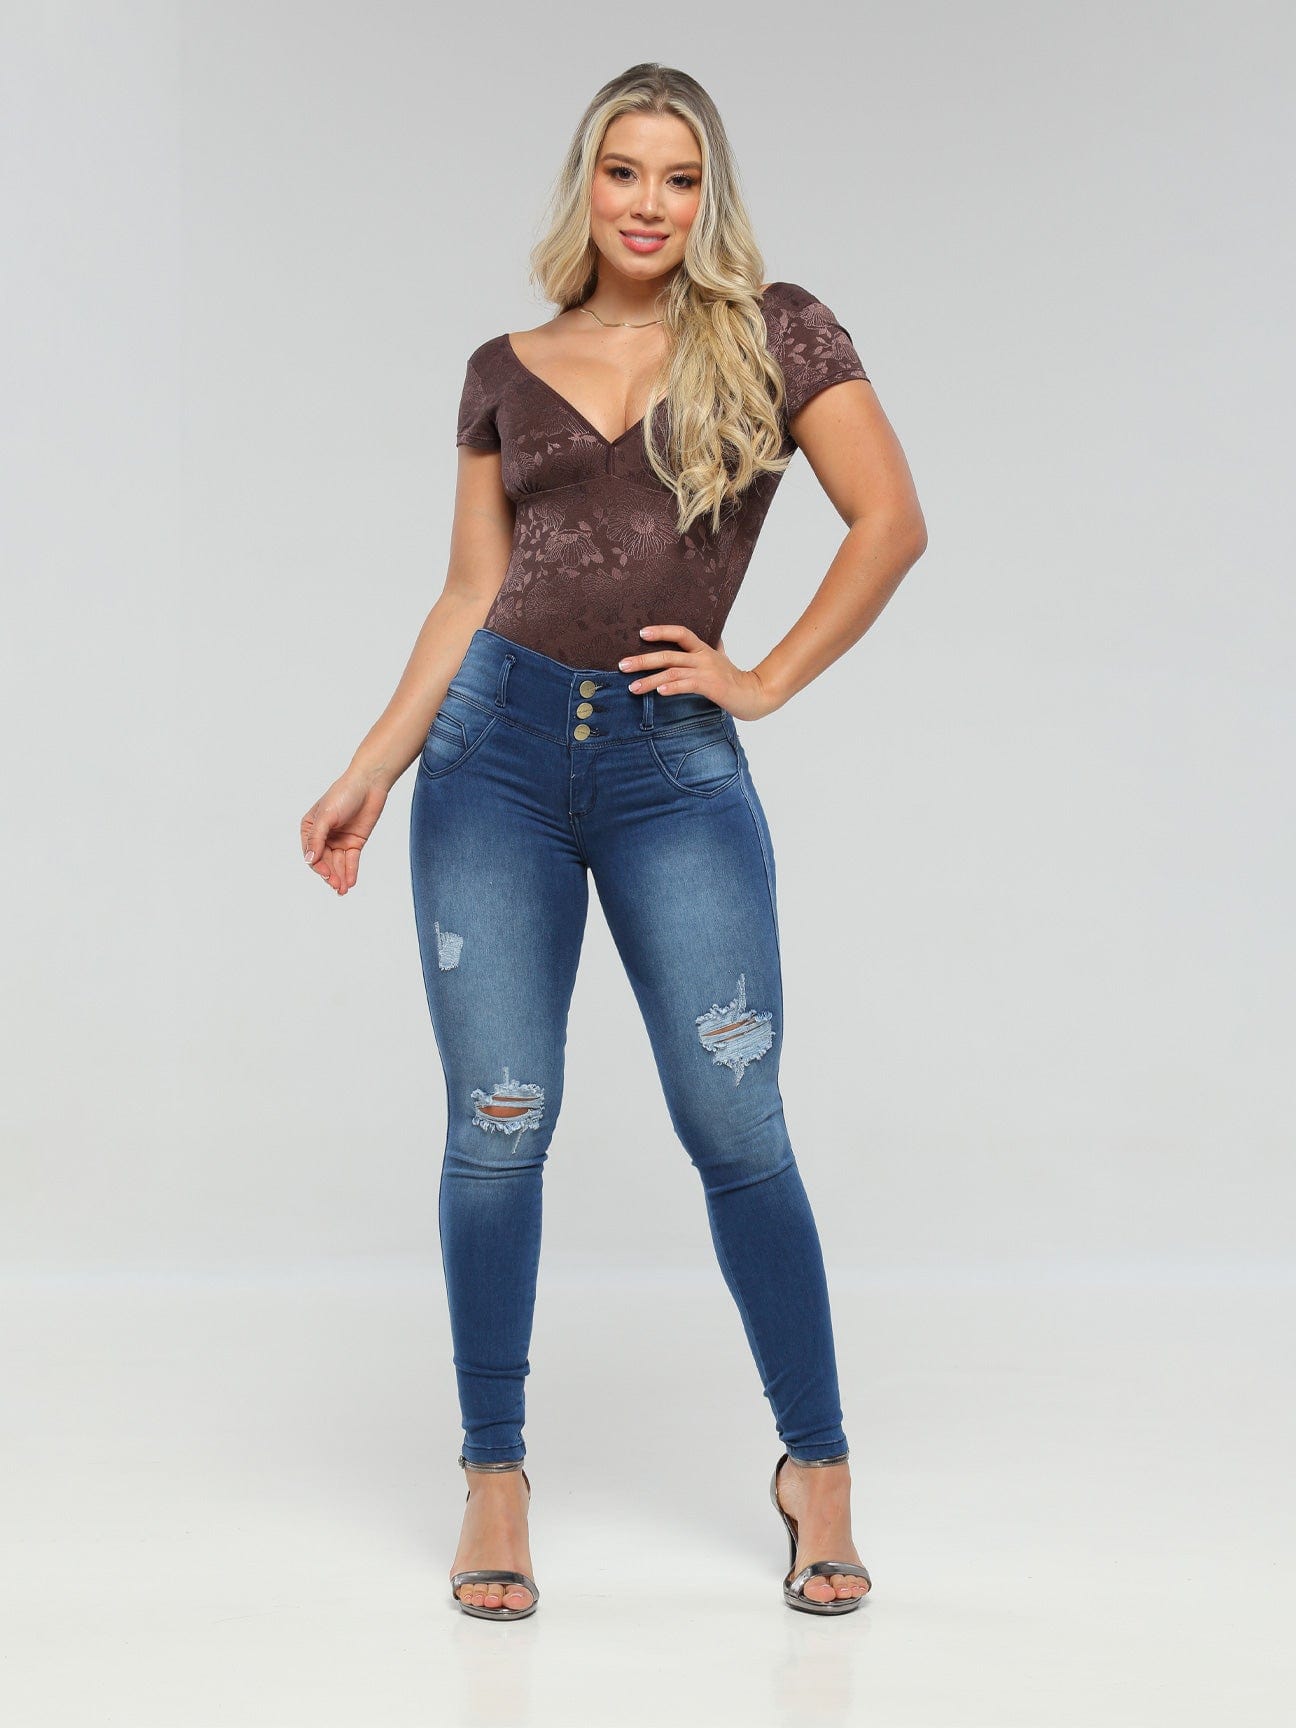 Jeans Y063775 100% Colombian Jeans – Jeanscol Boutique